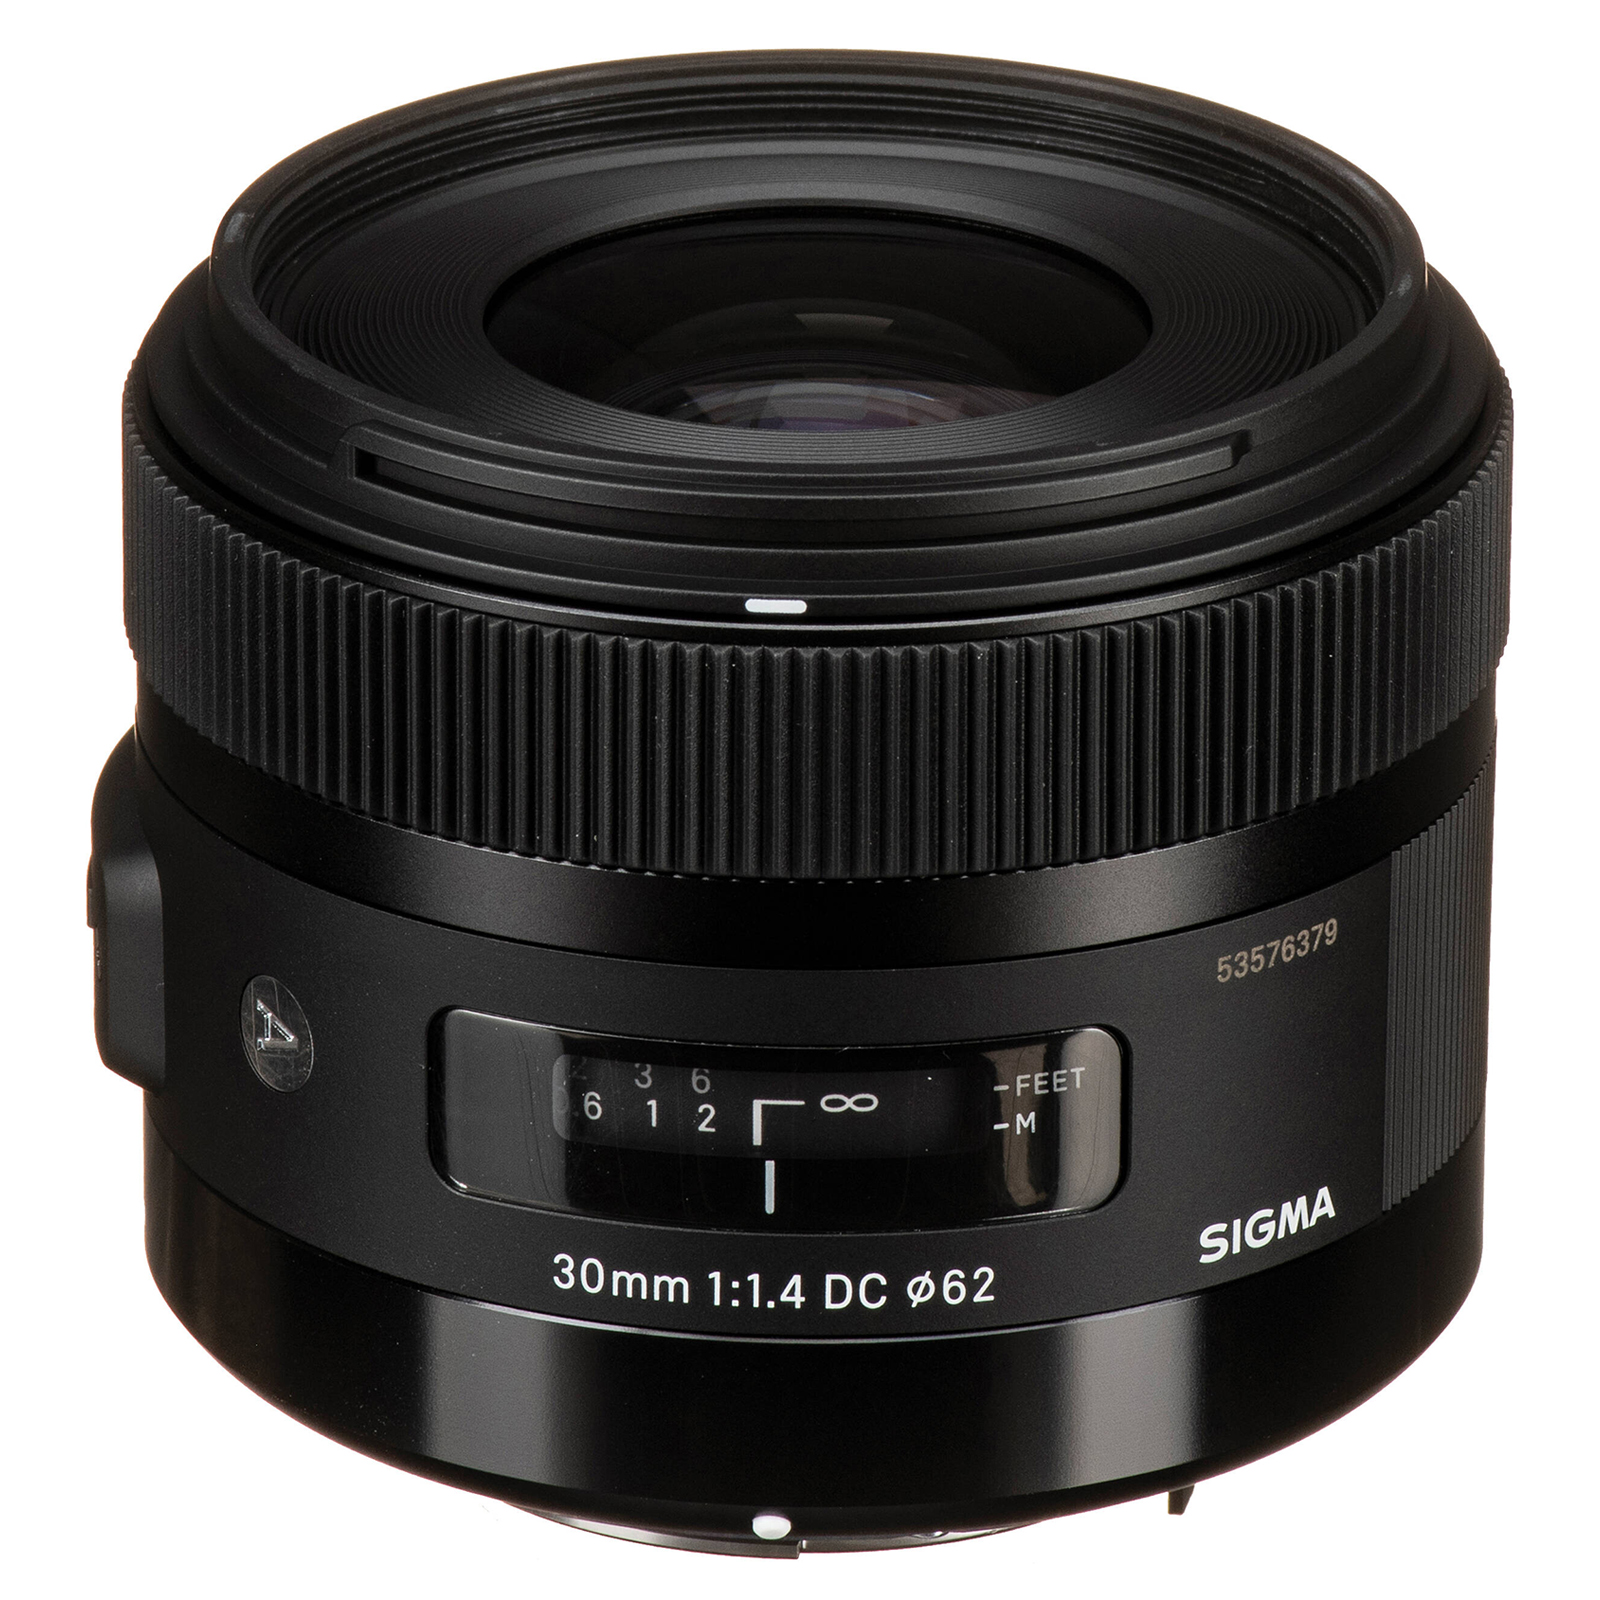 Sigma 30mm f1.4 DC HSM A Lens – Pentax Fit